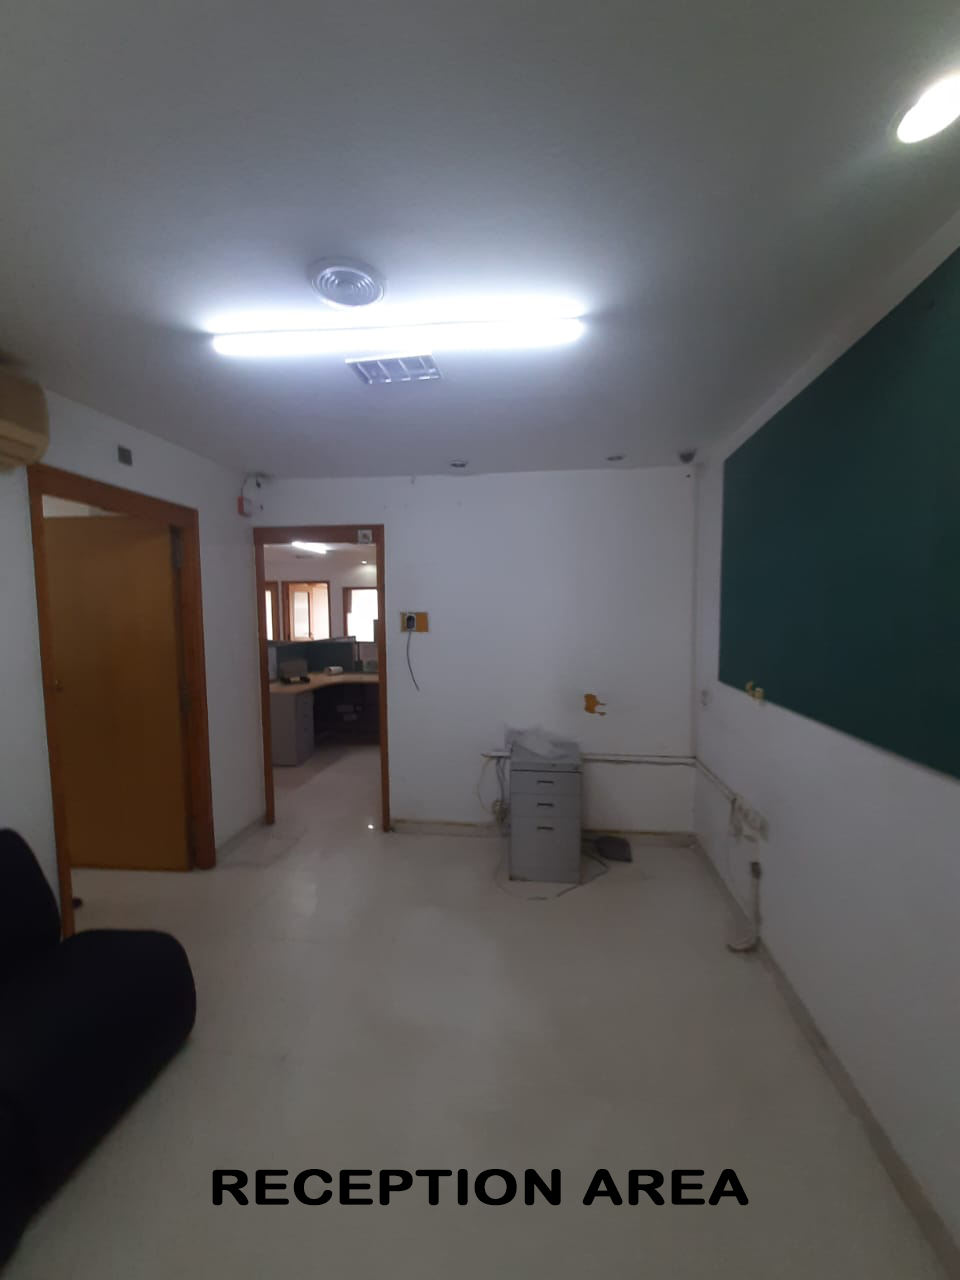 Office Space for sale in Alkapuri, Vadodara